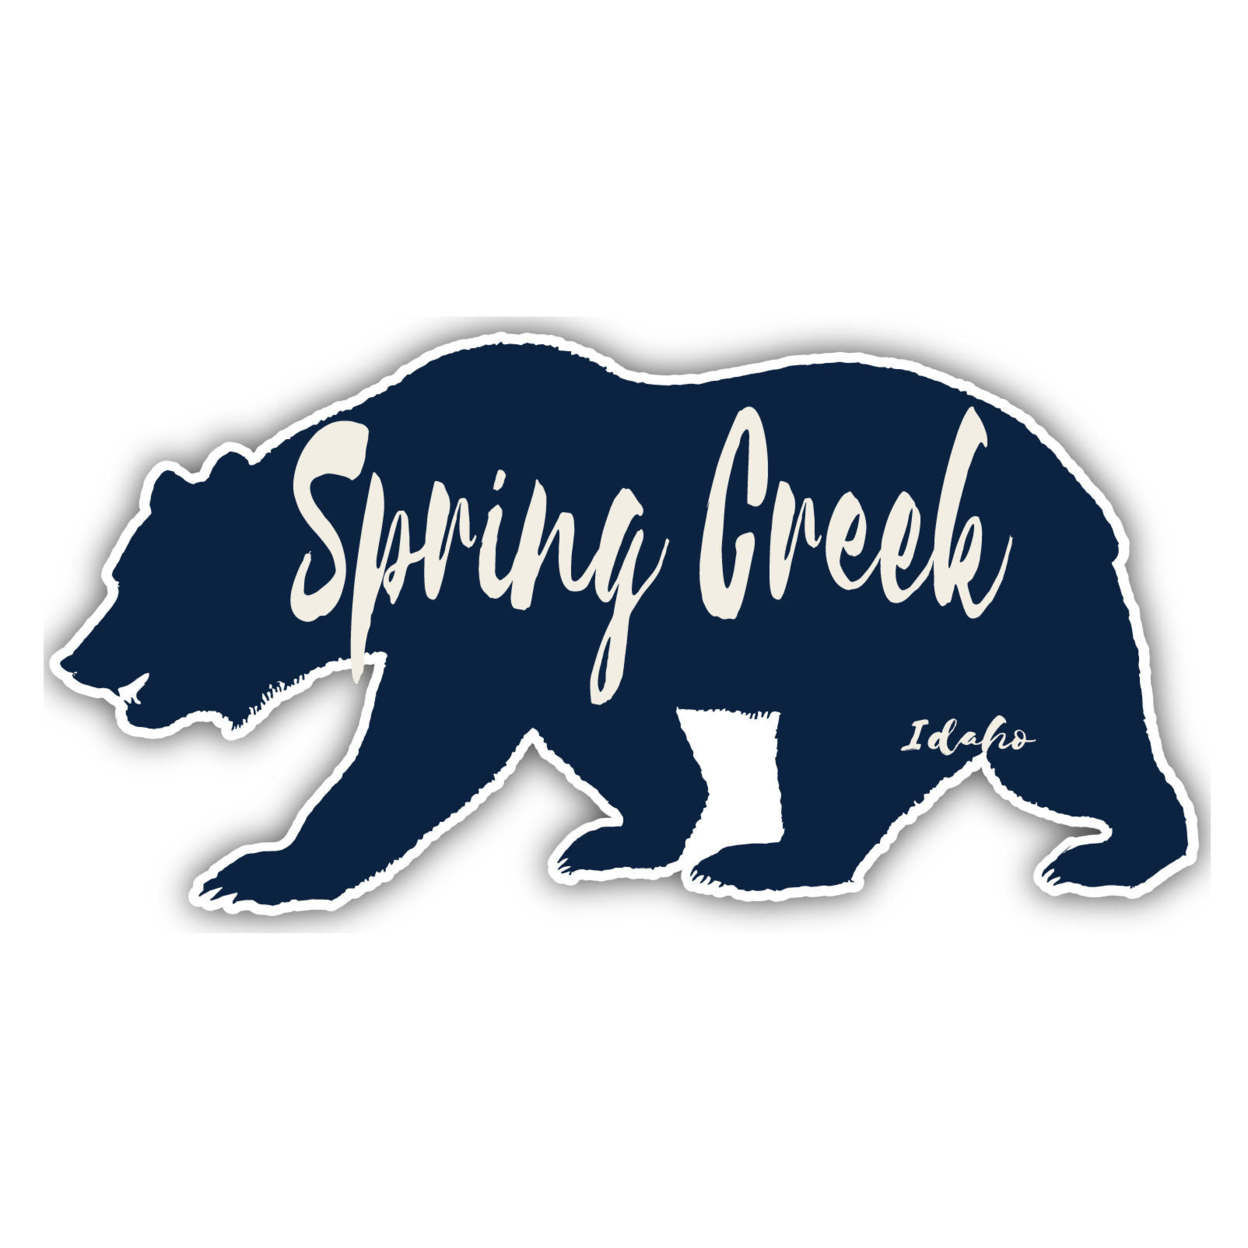 Spring Creek Idaho Souvenir Decorative Stickers (Choose Theme And Size) - Single Unit, 2-Inch, Bear